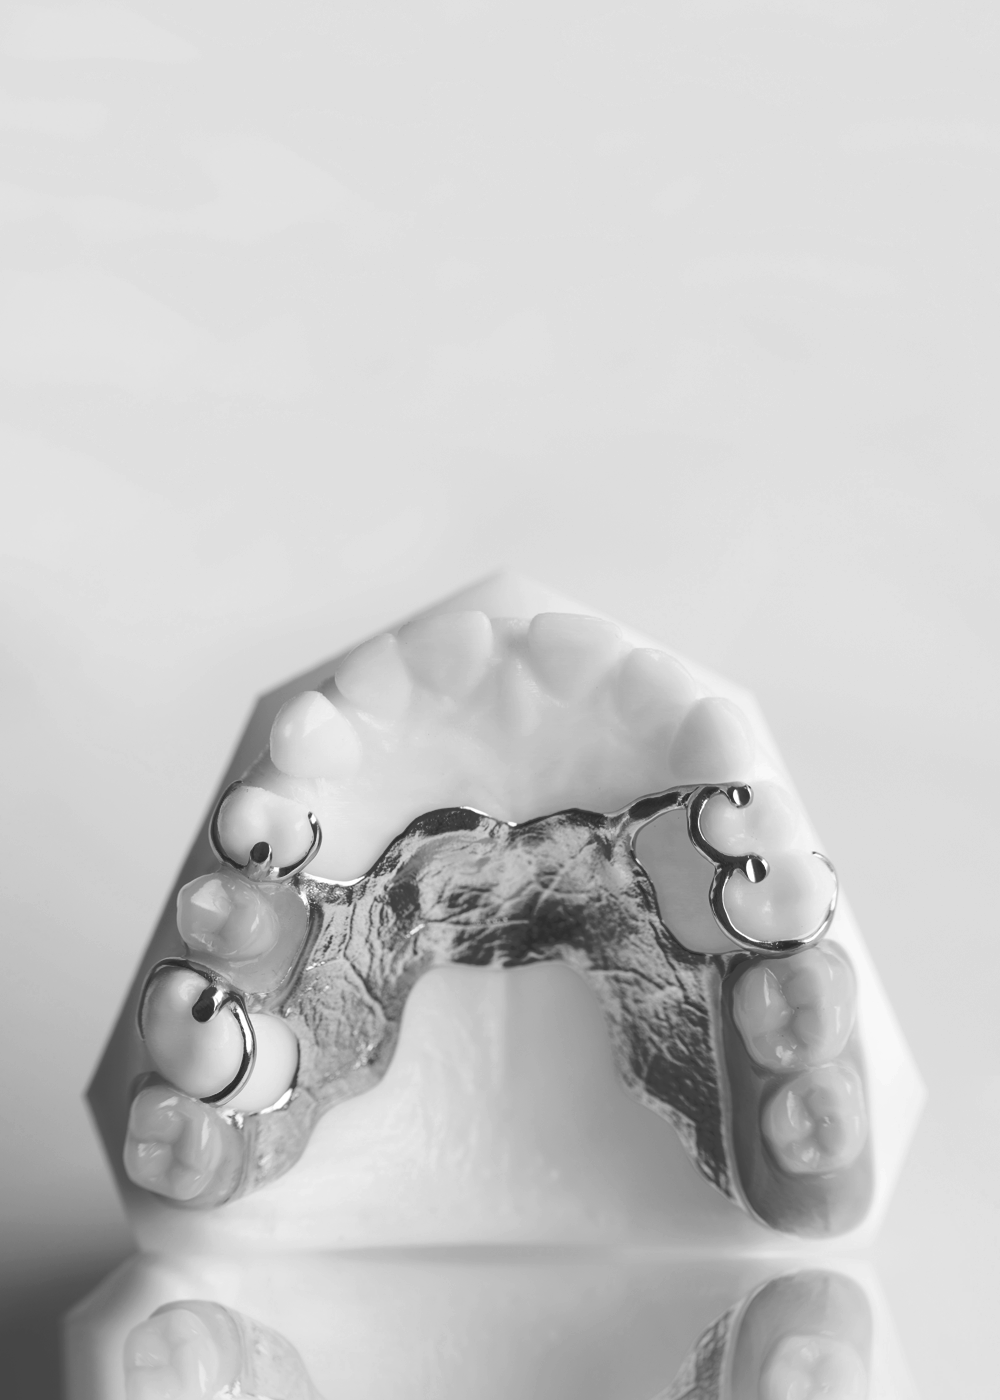 Removable partial dentures